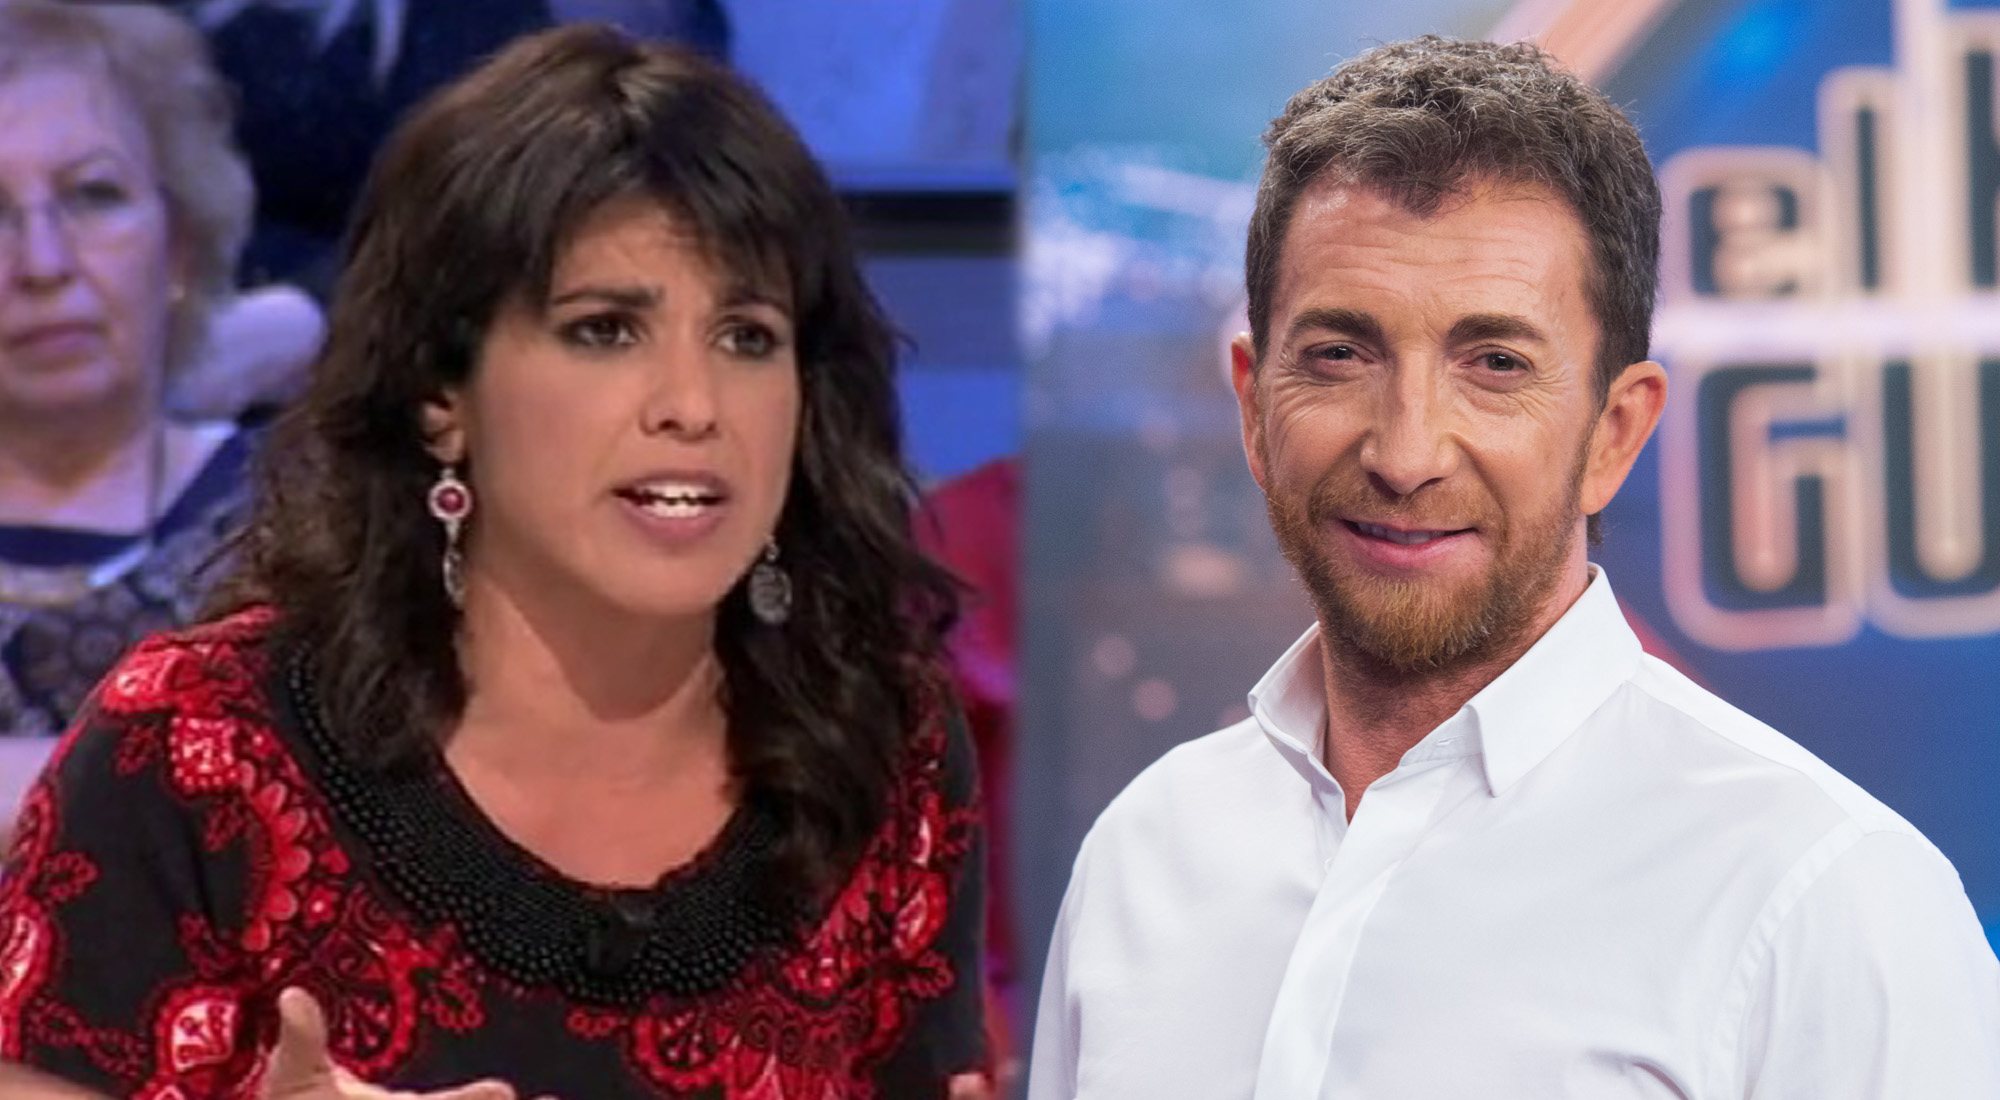 Teresa Rodríguez carga contra Pablo Motos y le acusa de "andalufobia"